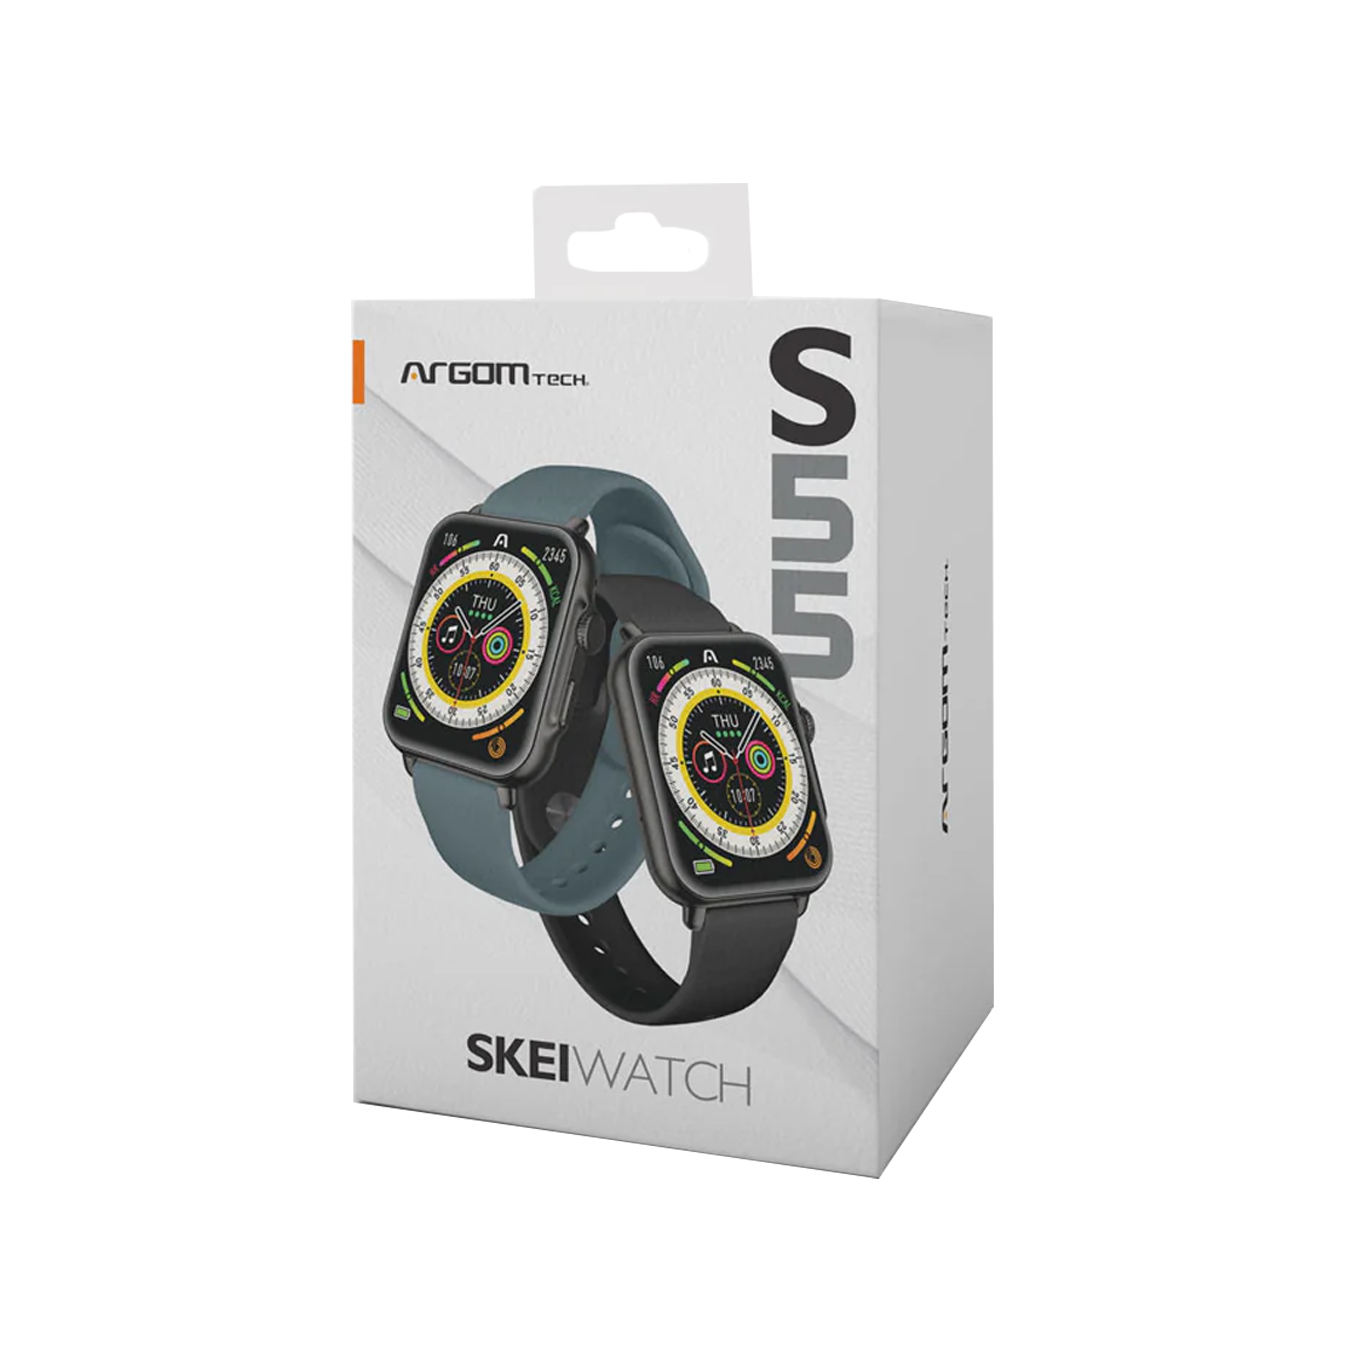 Reloj inteligente Skeiwatch S55 negro ARG-WT-6055BK Marca: Argom